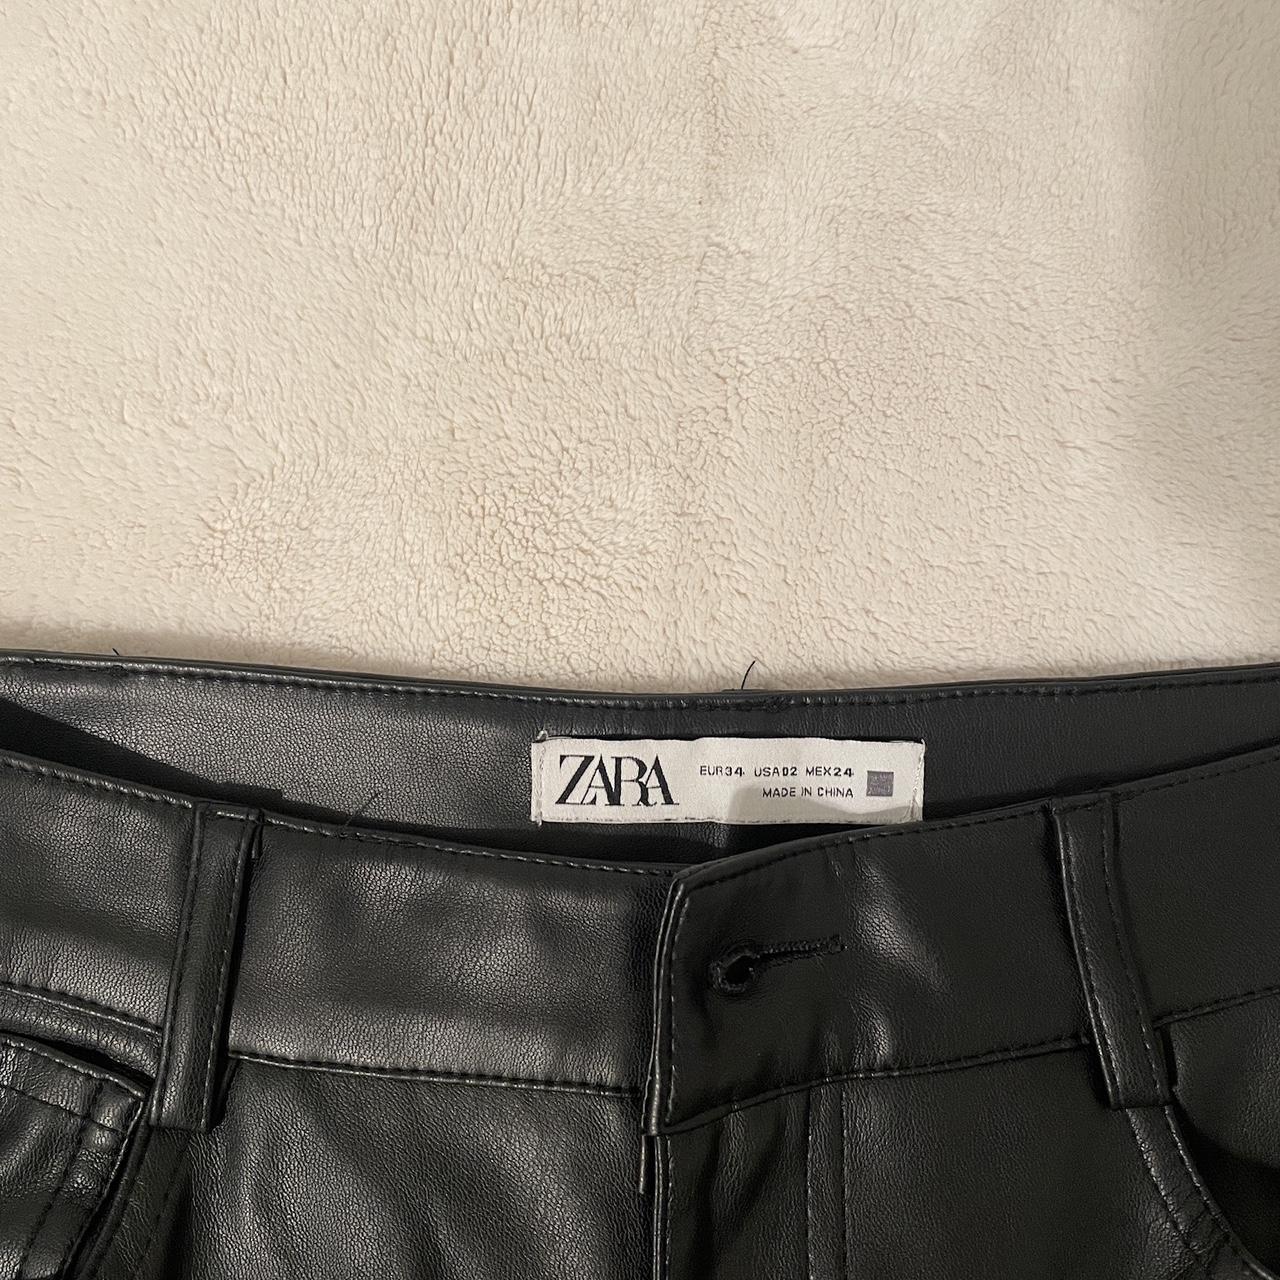 zara faux leather pants size 2 - Depop